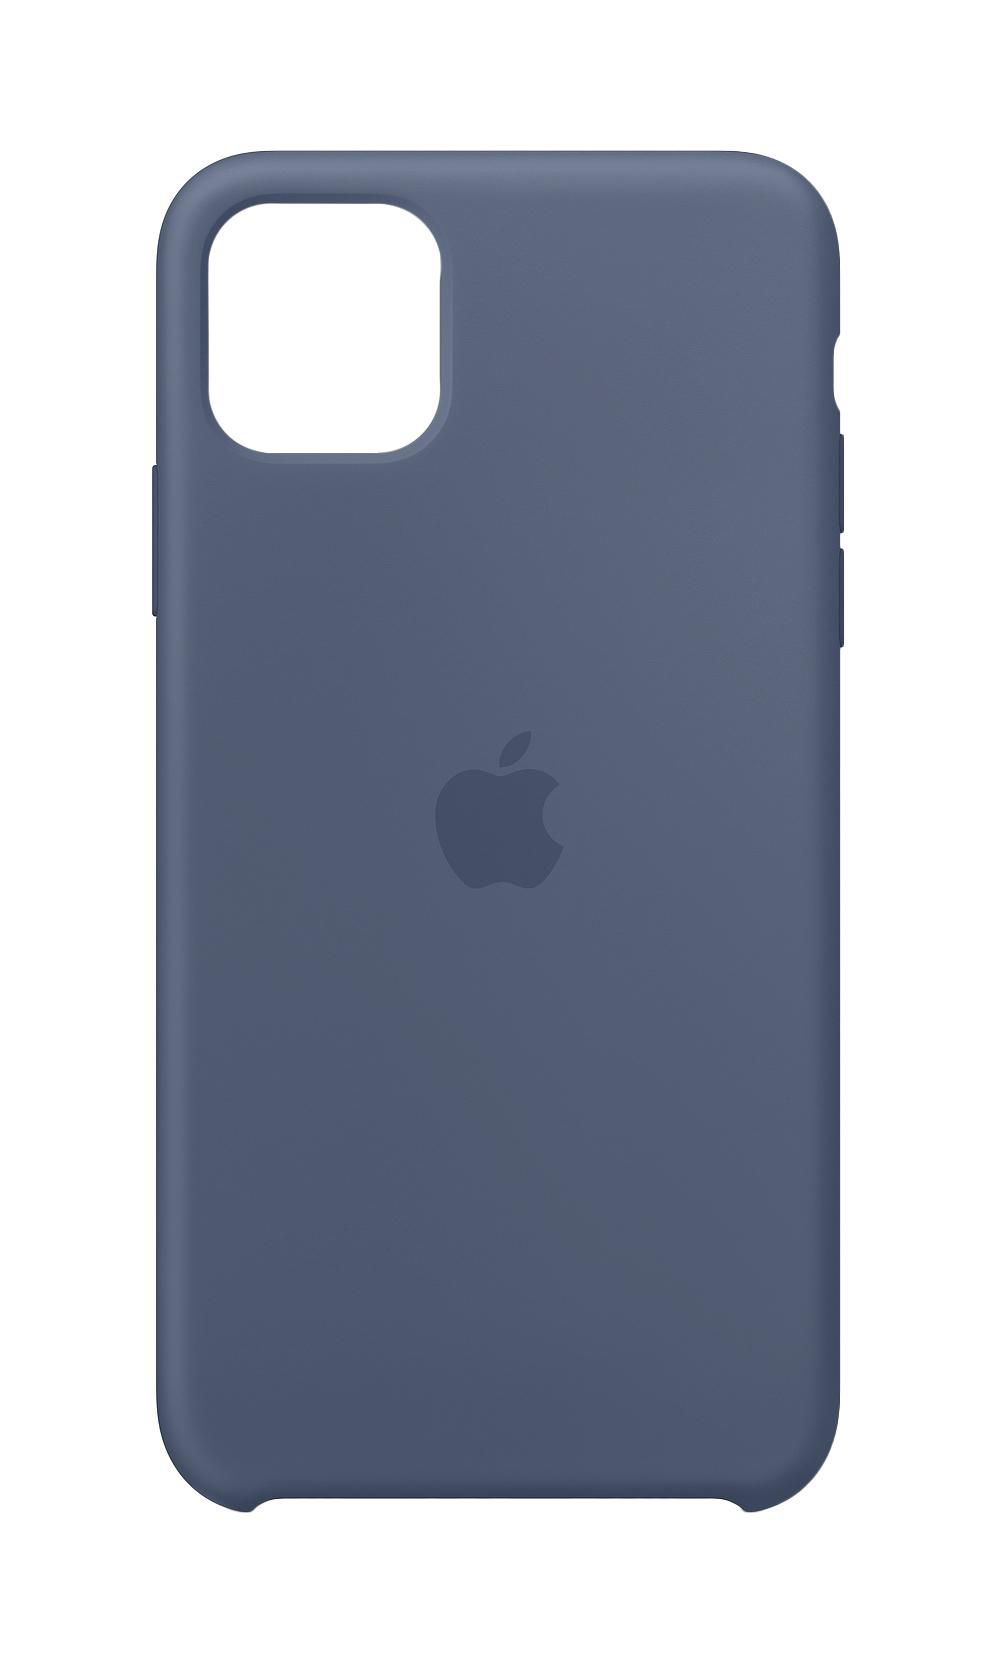 APPLE iPhone 11 Pro Max Silicone Case - Alaskan Blue